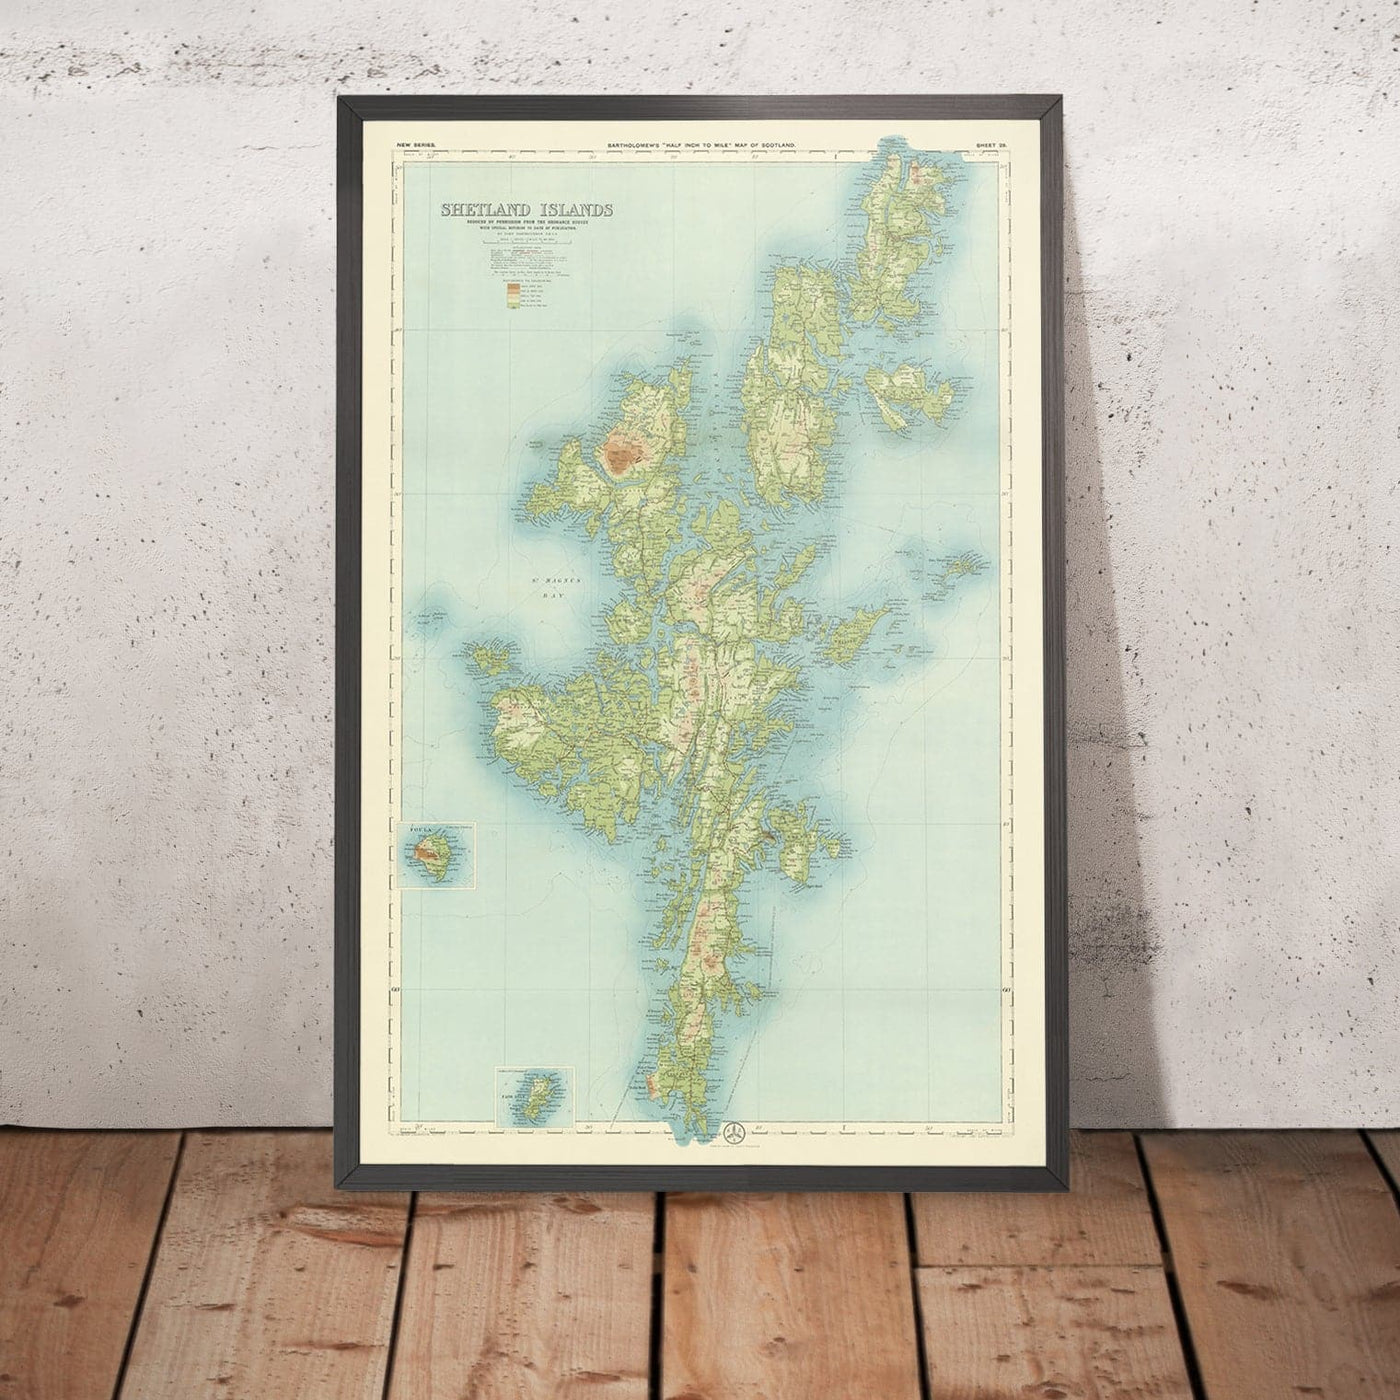 Old OS Map of Shetland Islands by Bartholomew, 1901: Lerwick, Ronas Hill, Sullom Voe, Jarlshof, Fair Isle, Foula